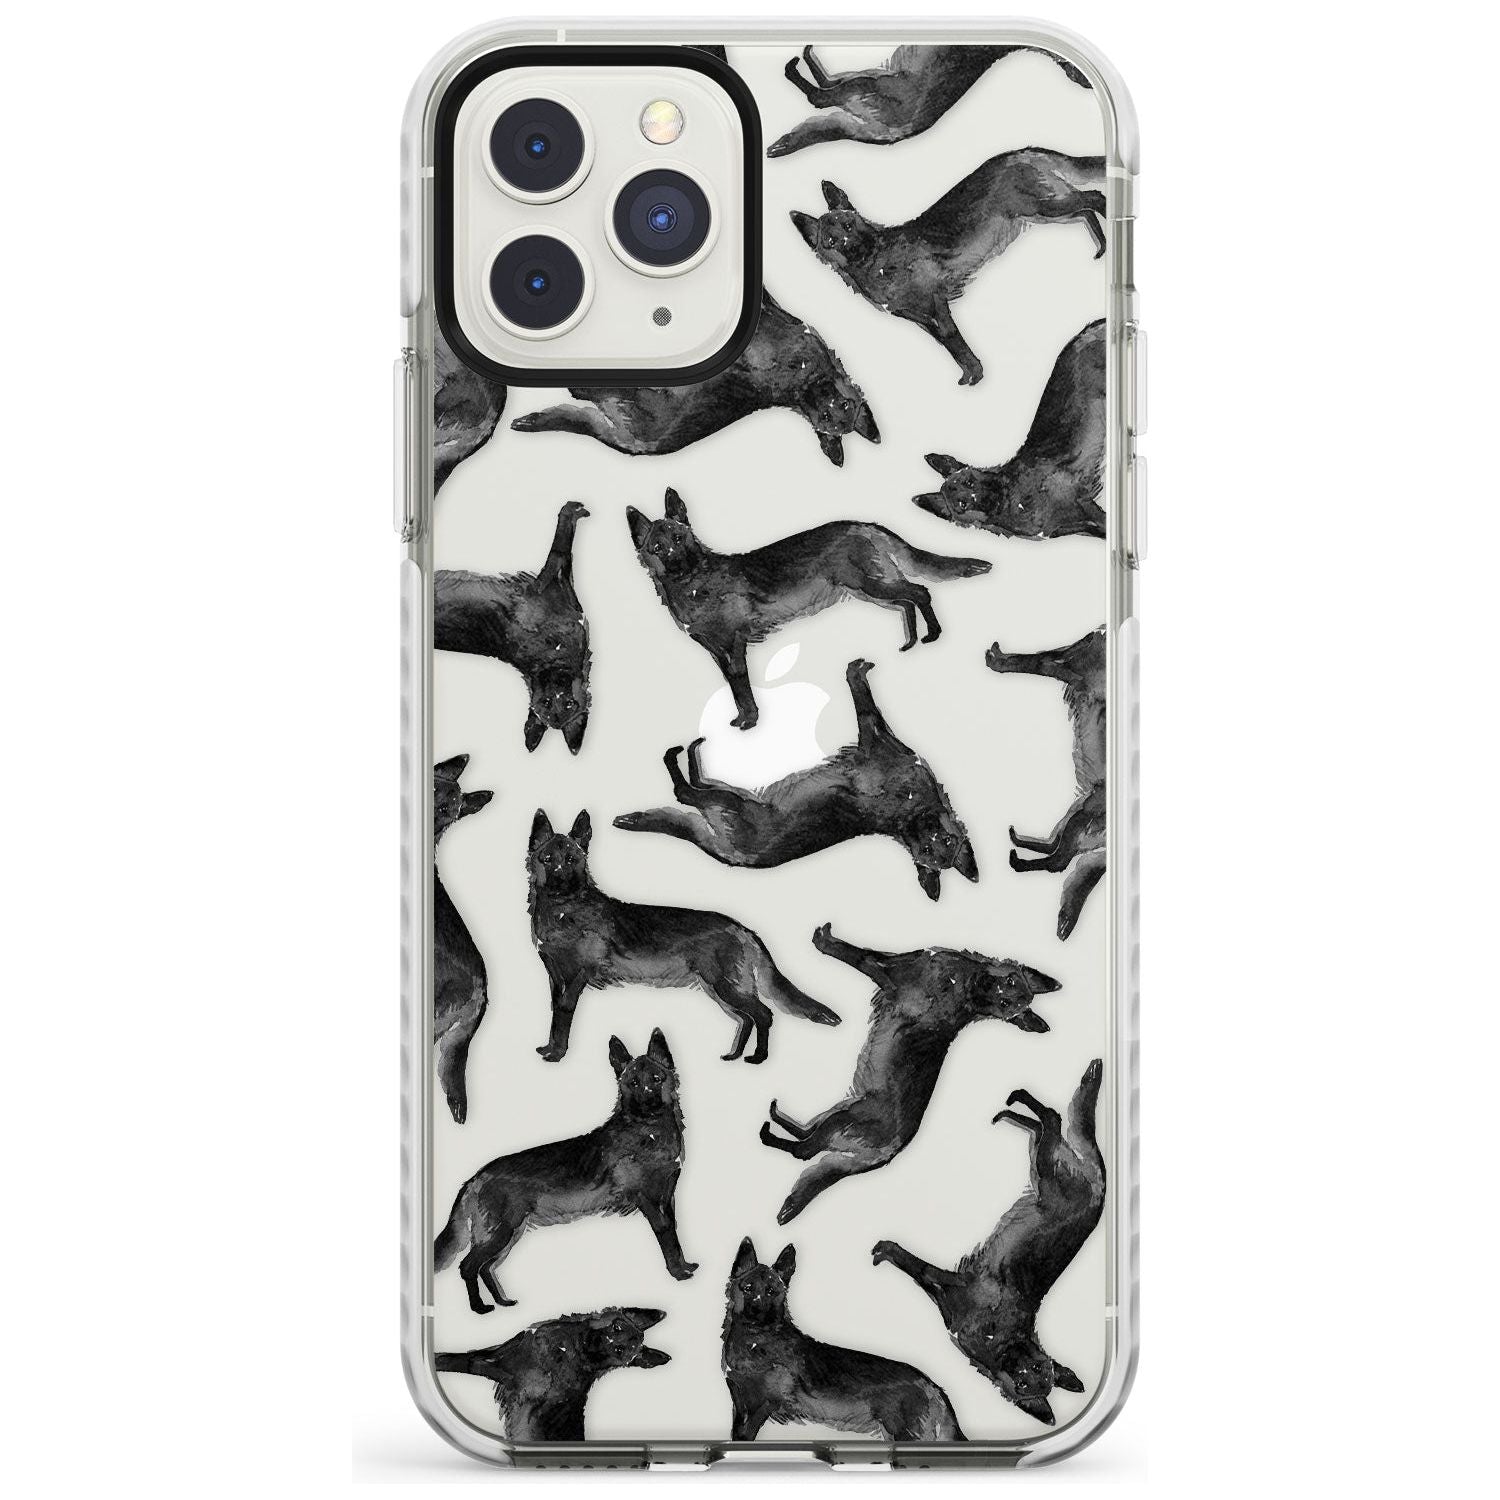 German Shepherd (Black) Watercolour Dog Pattern Impact Phone Case for iPhone 11 Pro Max